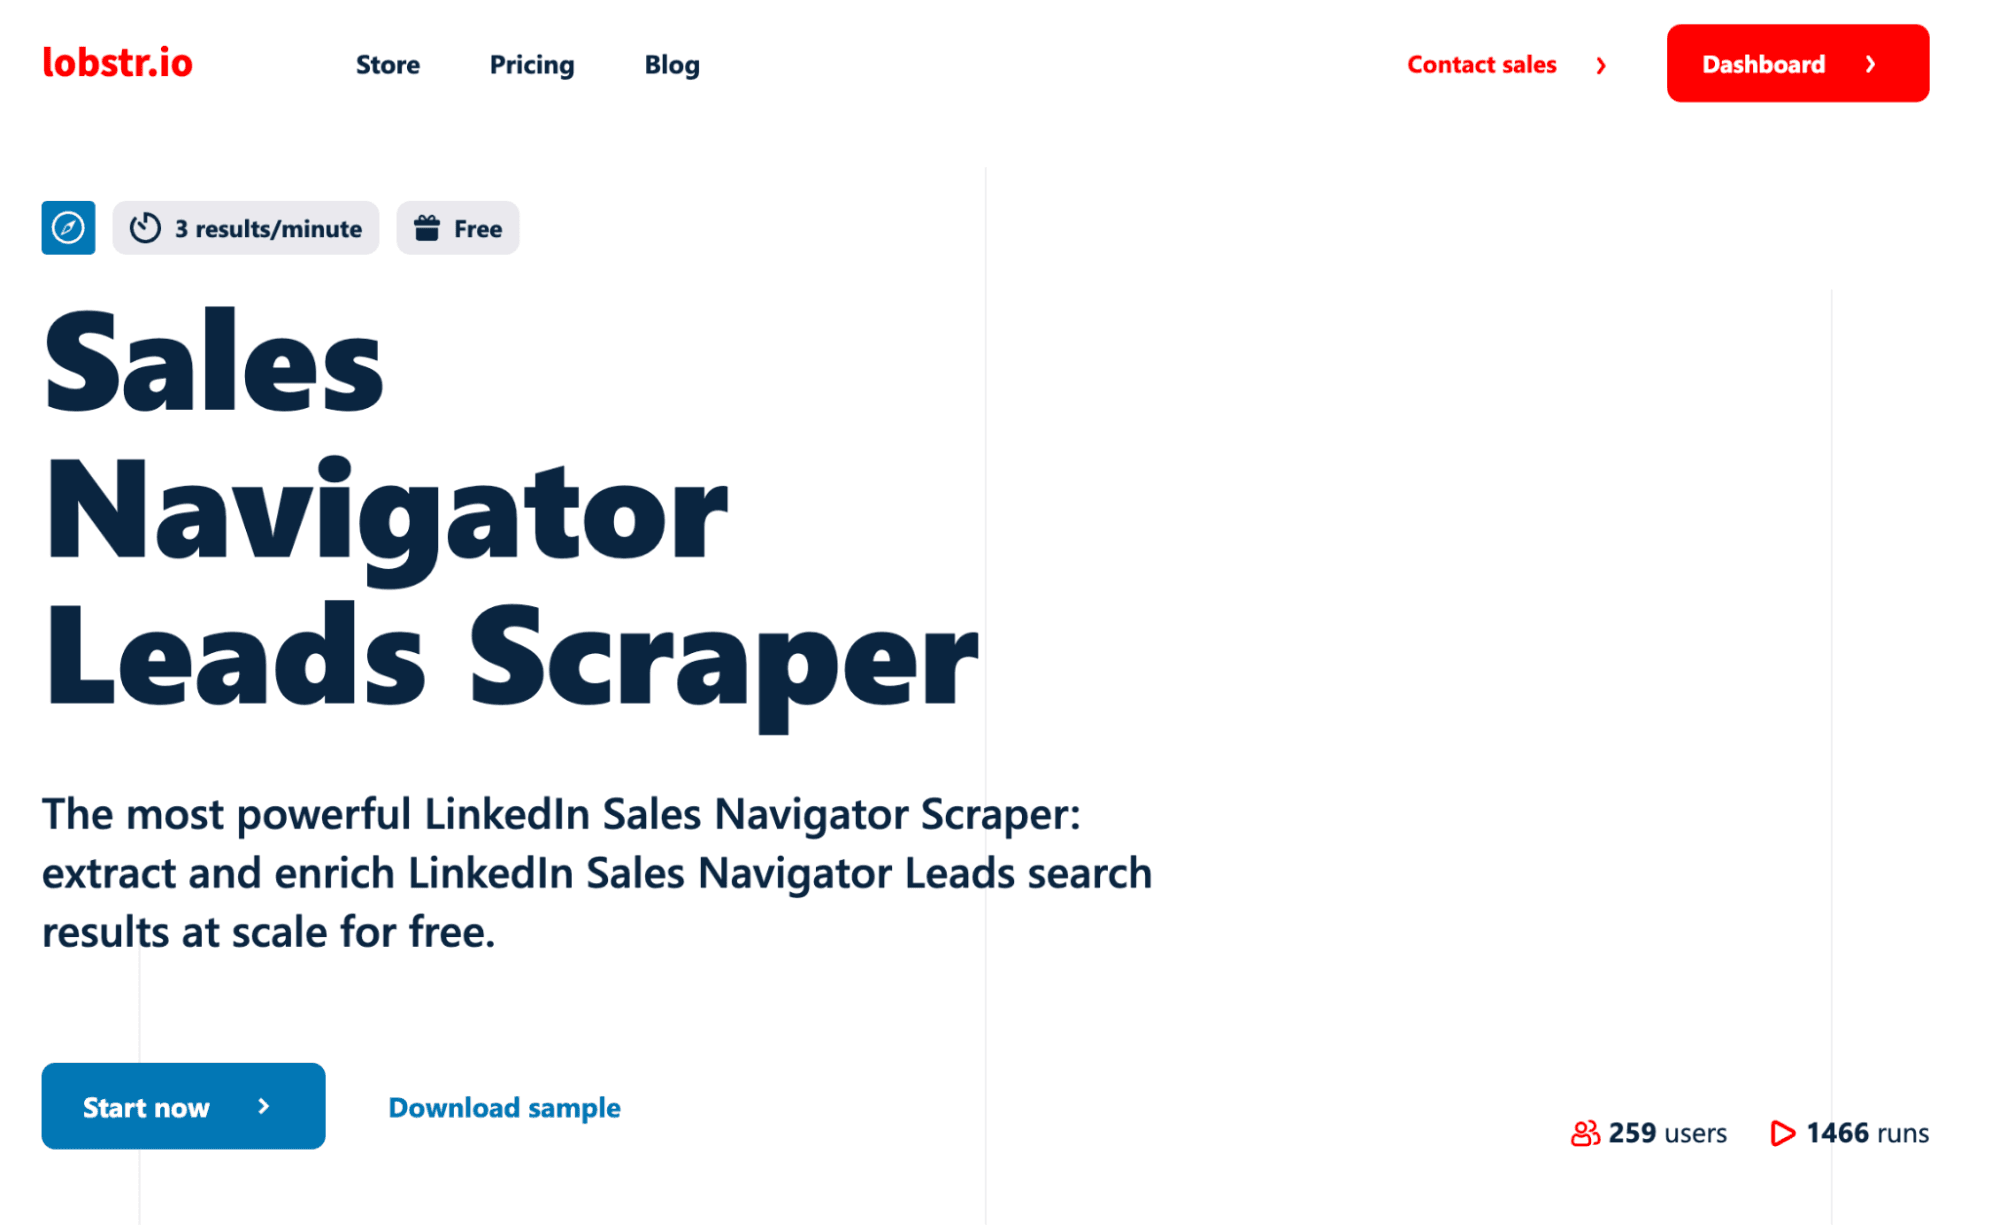 lobstr io linkedin sales navigator leads scraper product page - image51.png